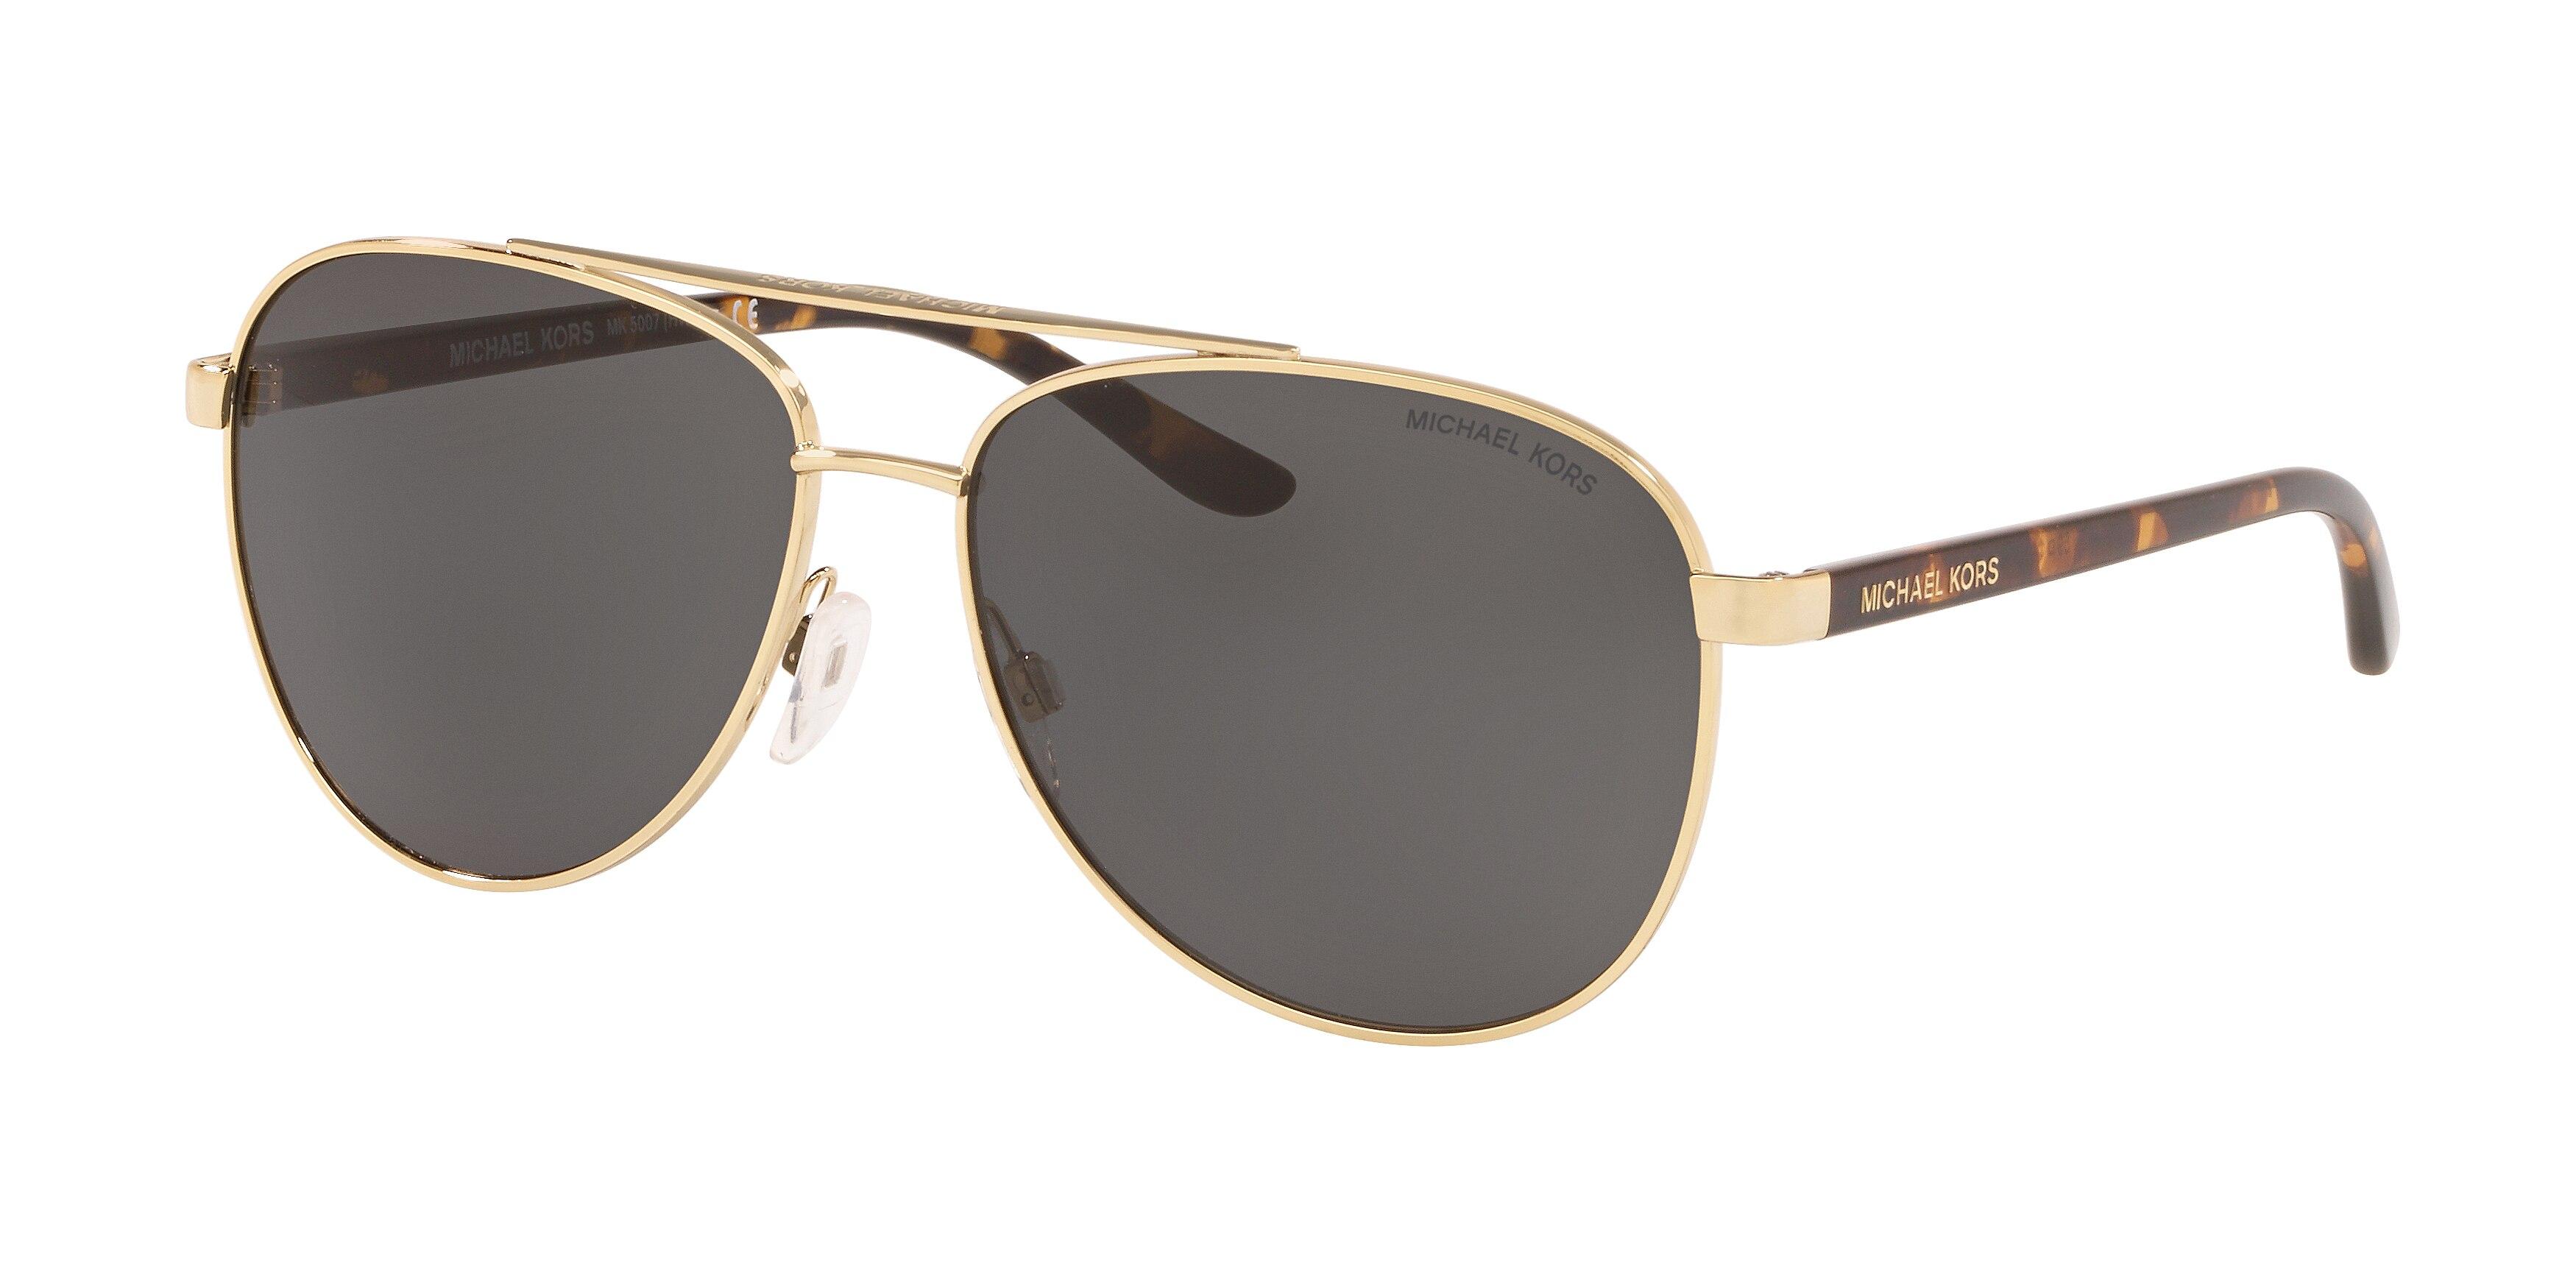 Michael Kors Hvar MK 5007 Metal Womens Aviator Sunglasses Light Gold 59mm Adult - image 1 of 3